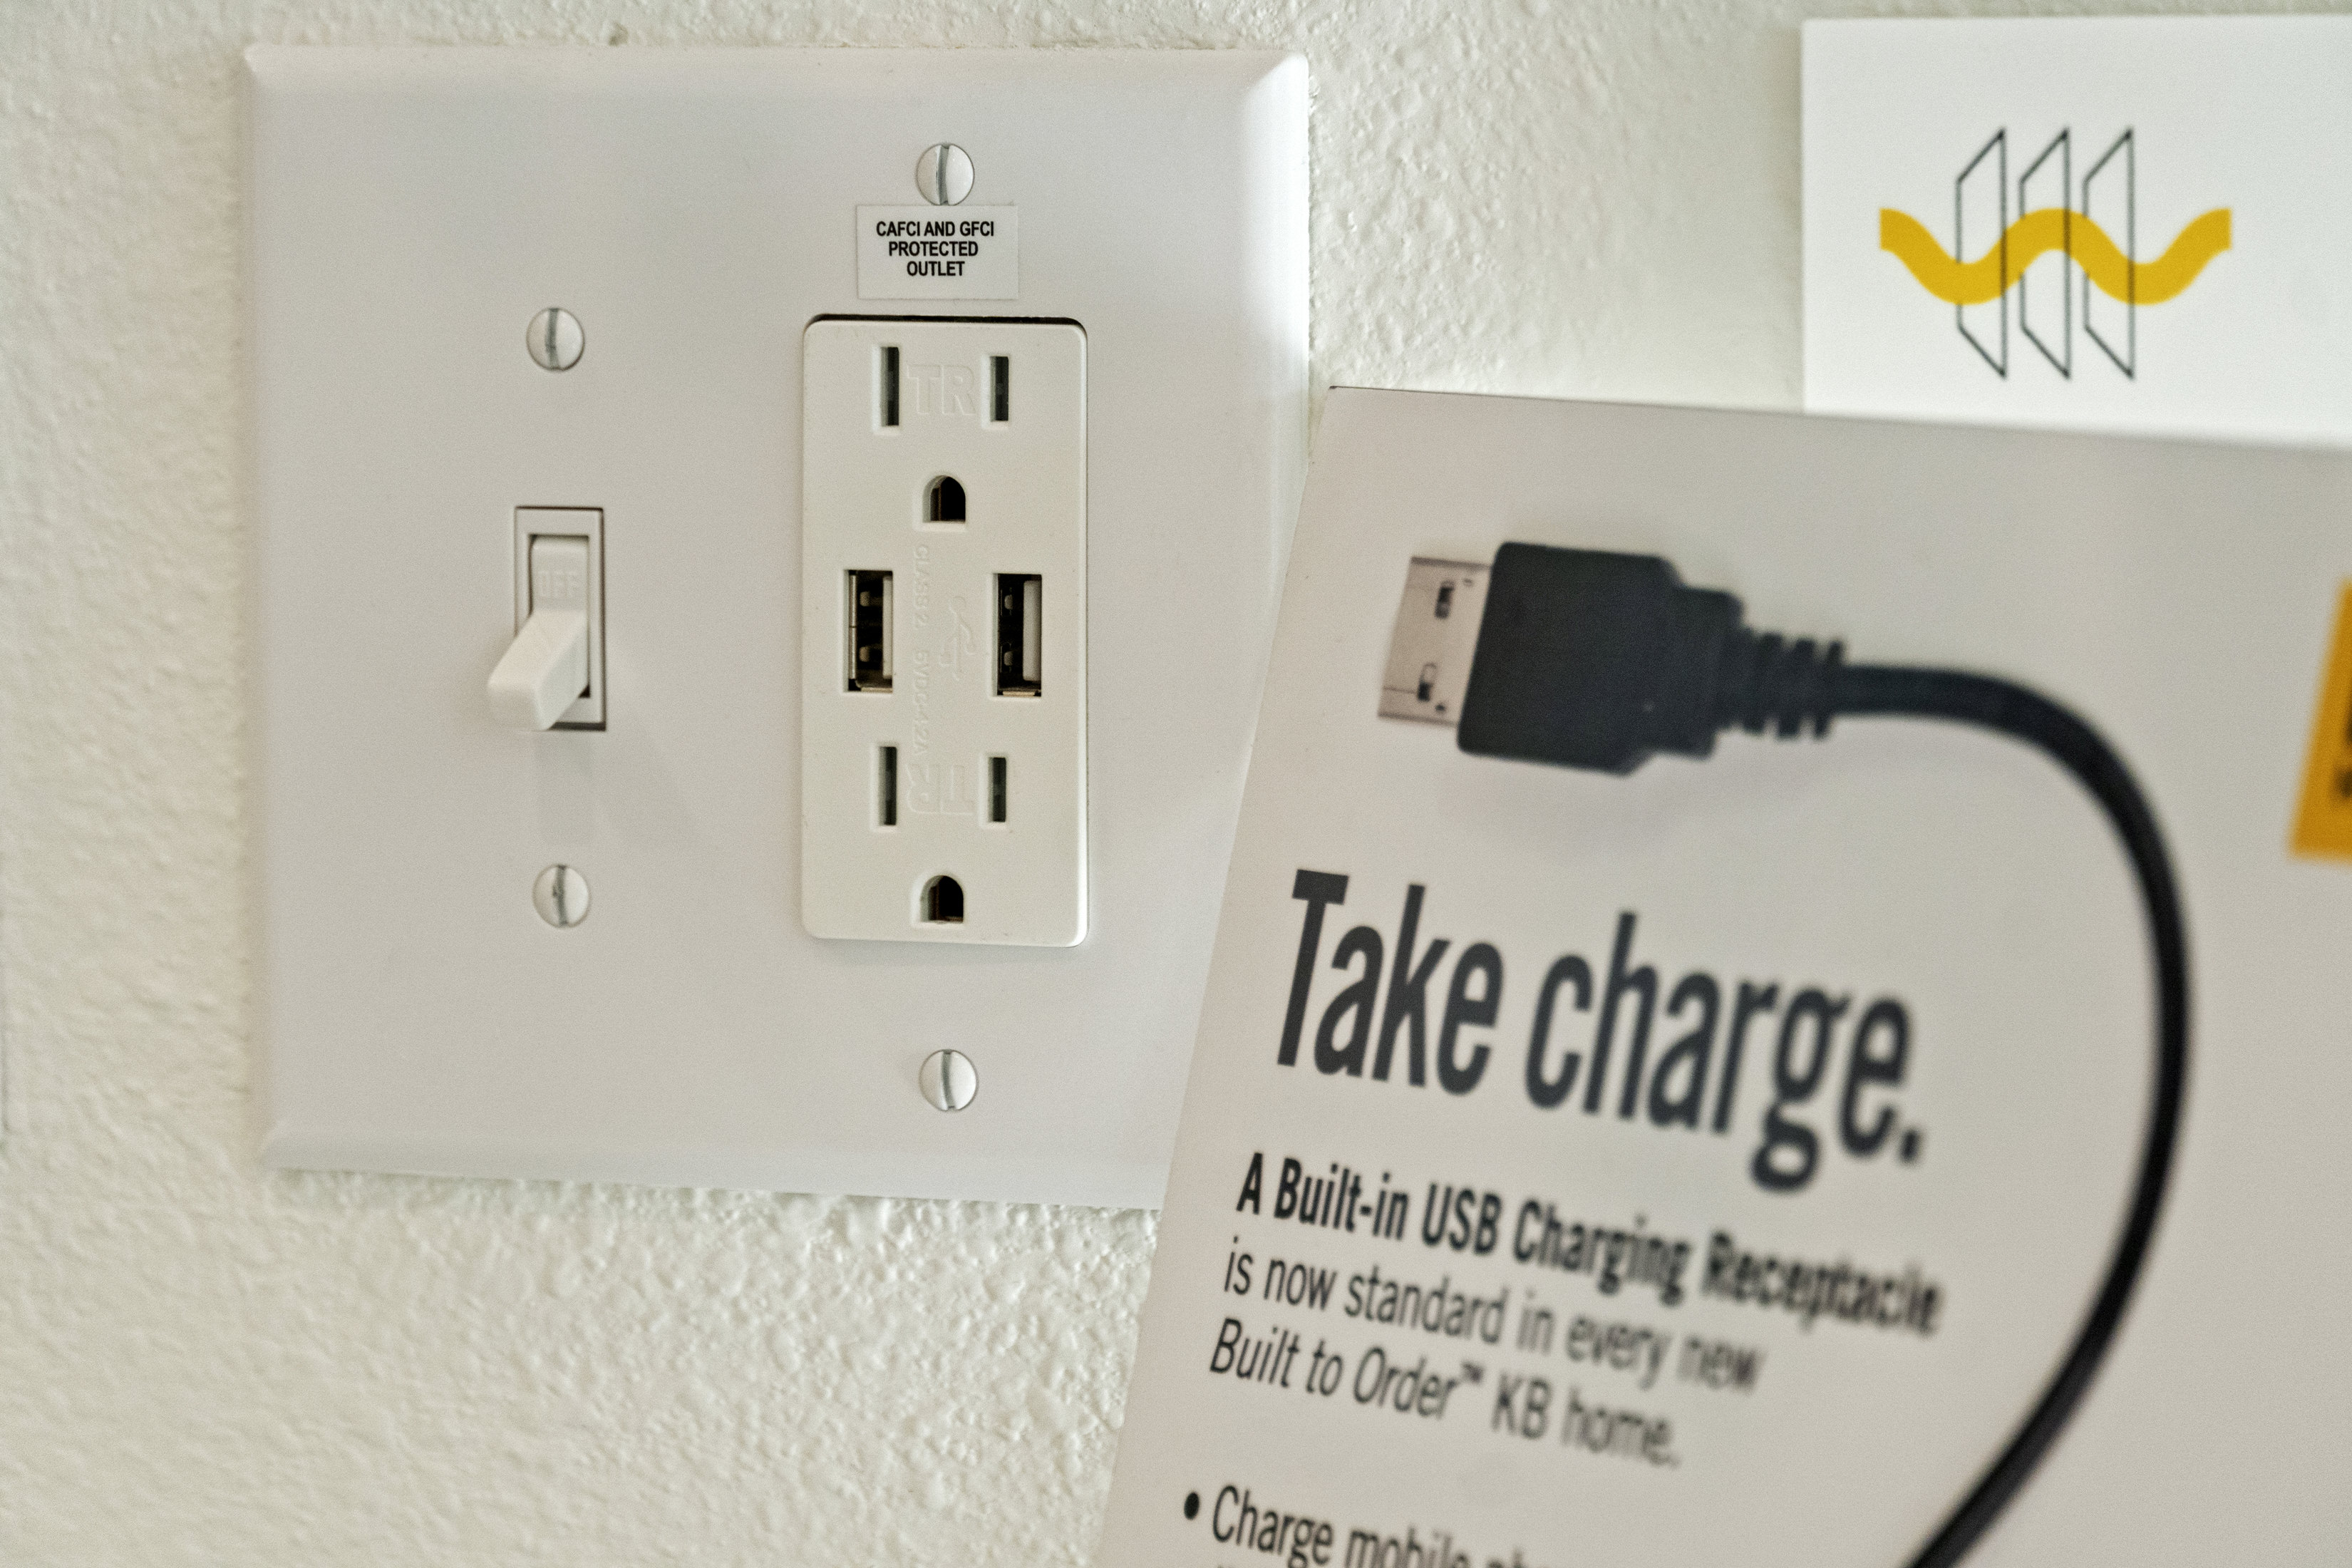 USB charging port at kitchen